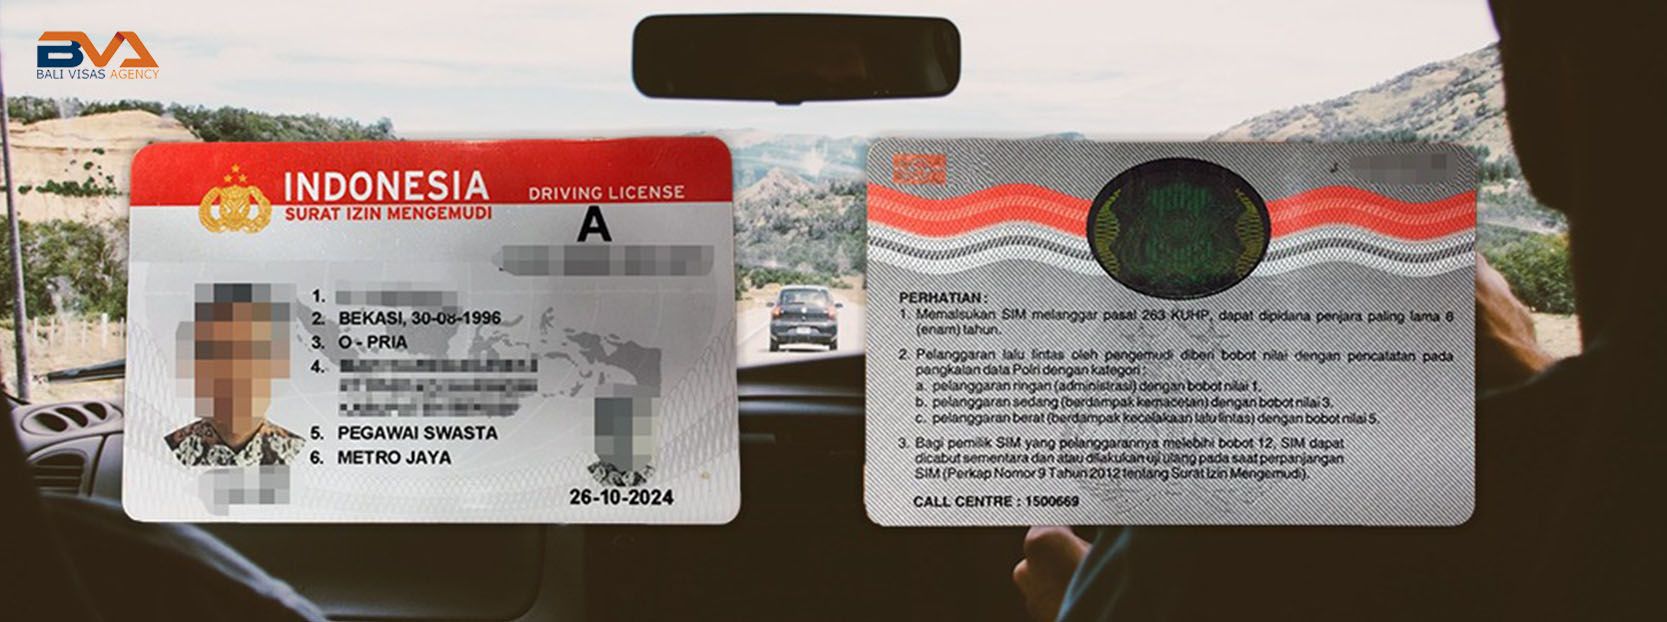 tourist driving license